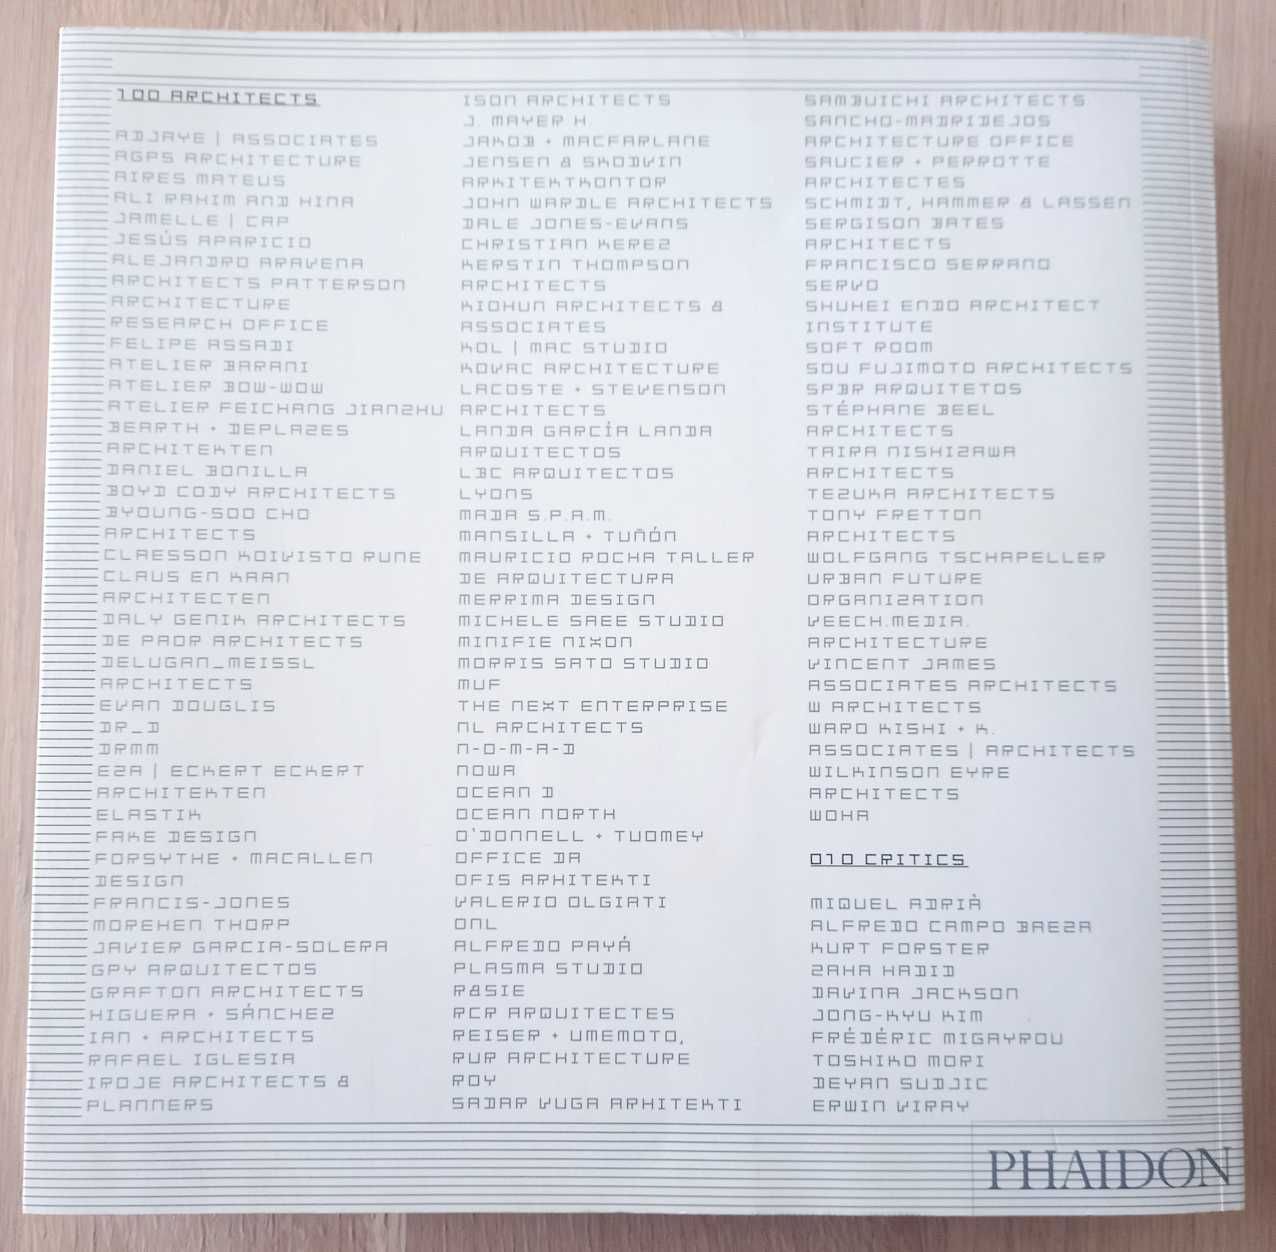 10 x 10 _ 2 100 Architects 10 critics Phaidon